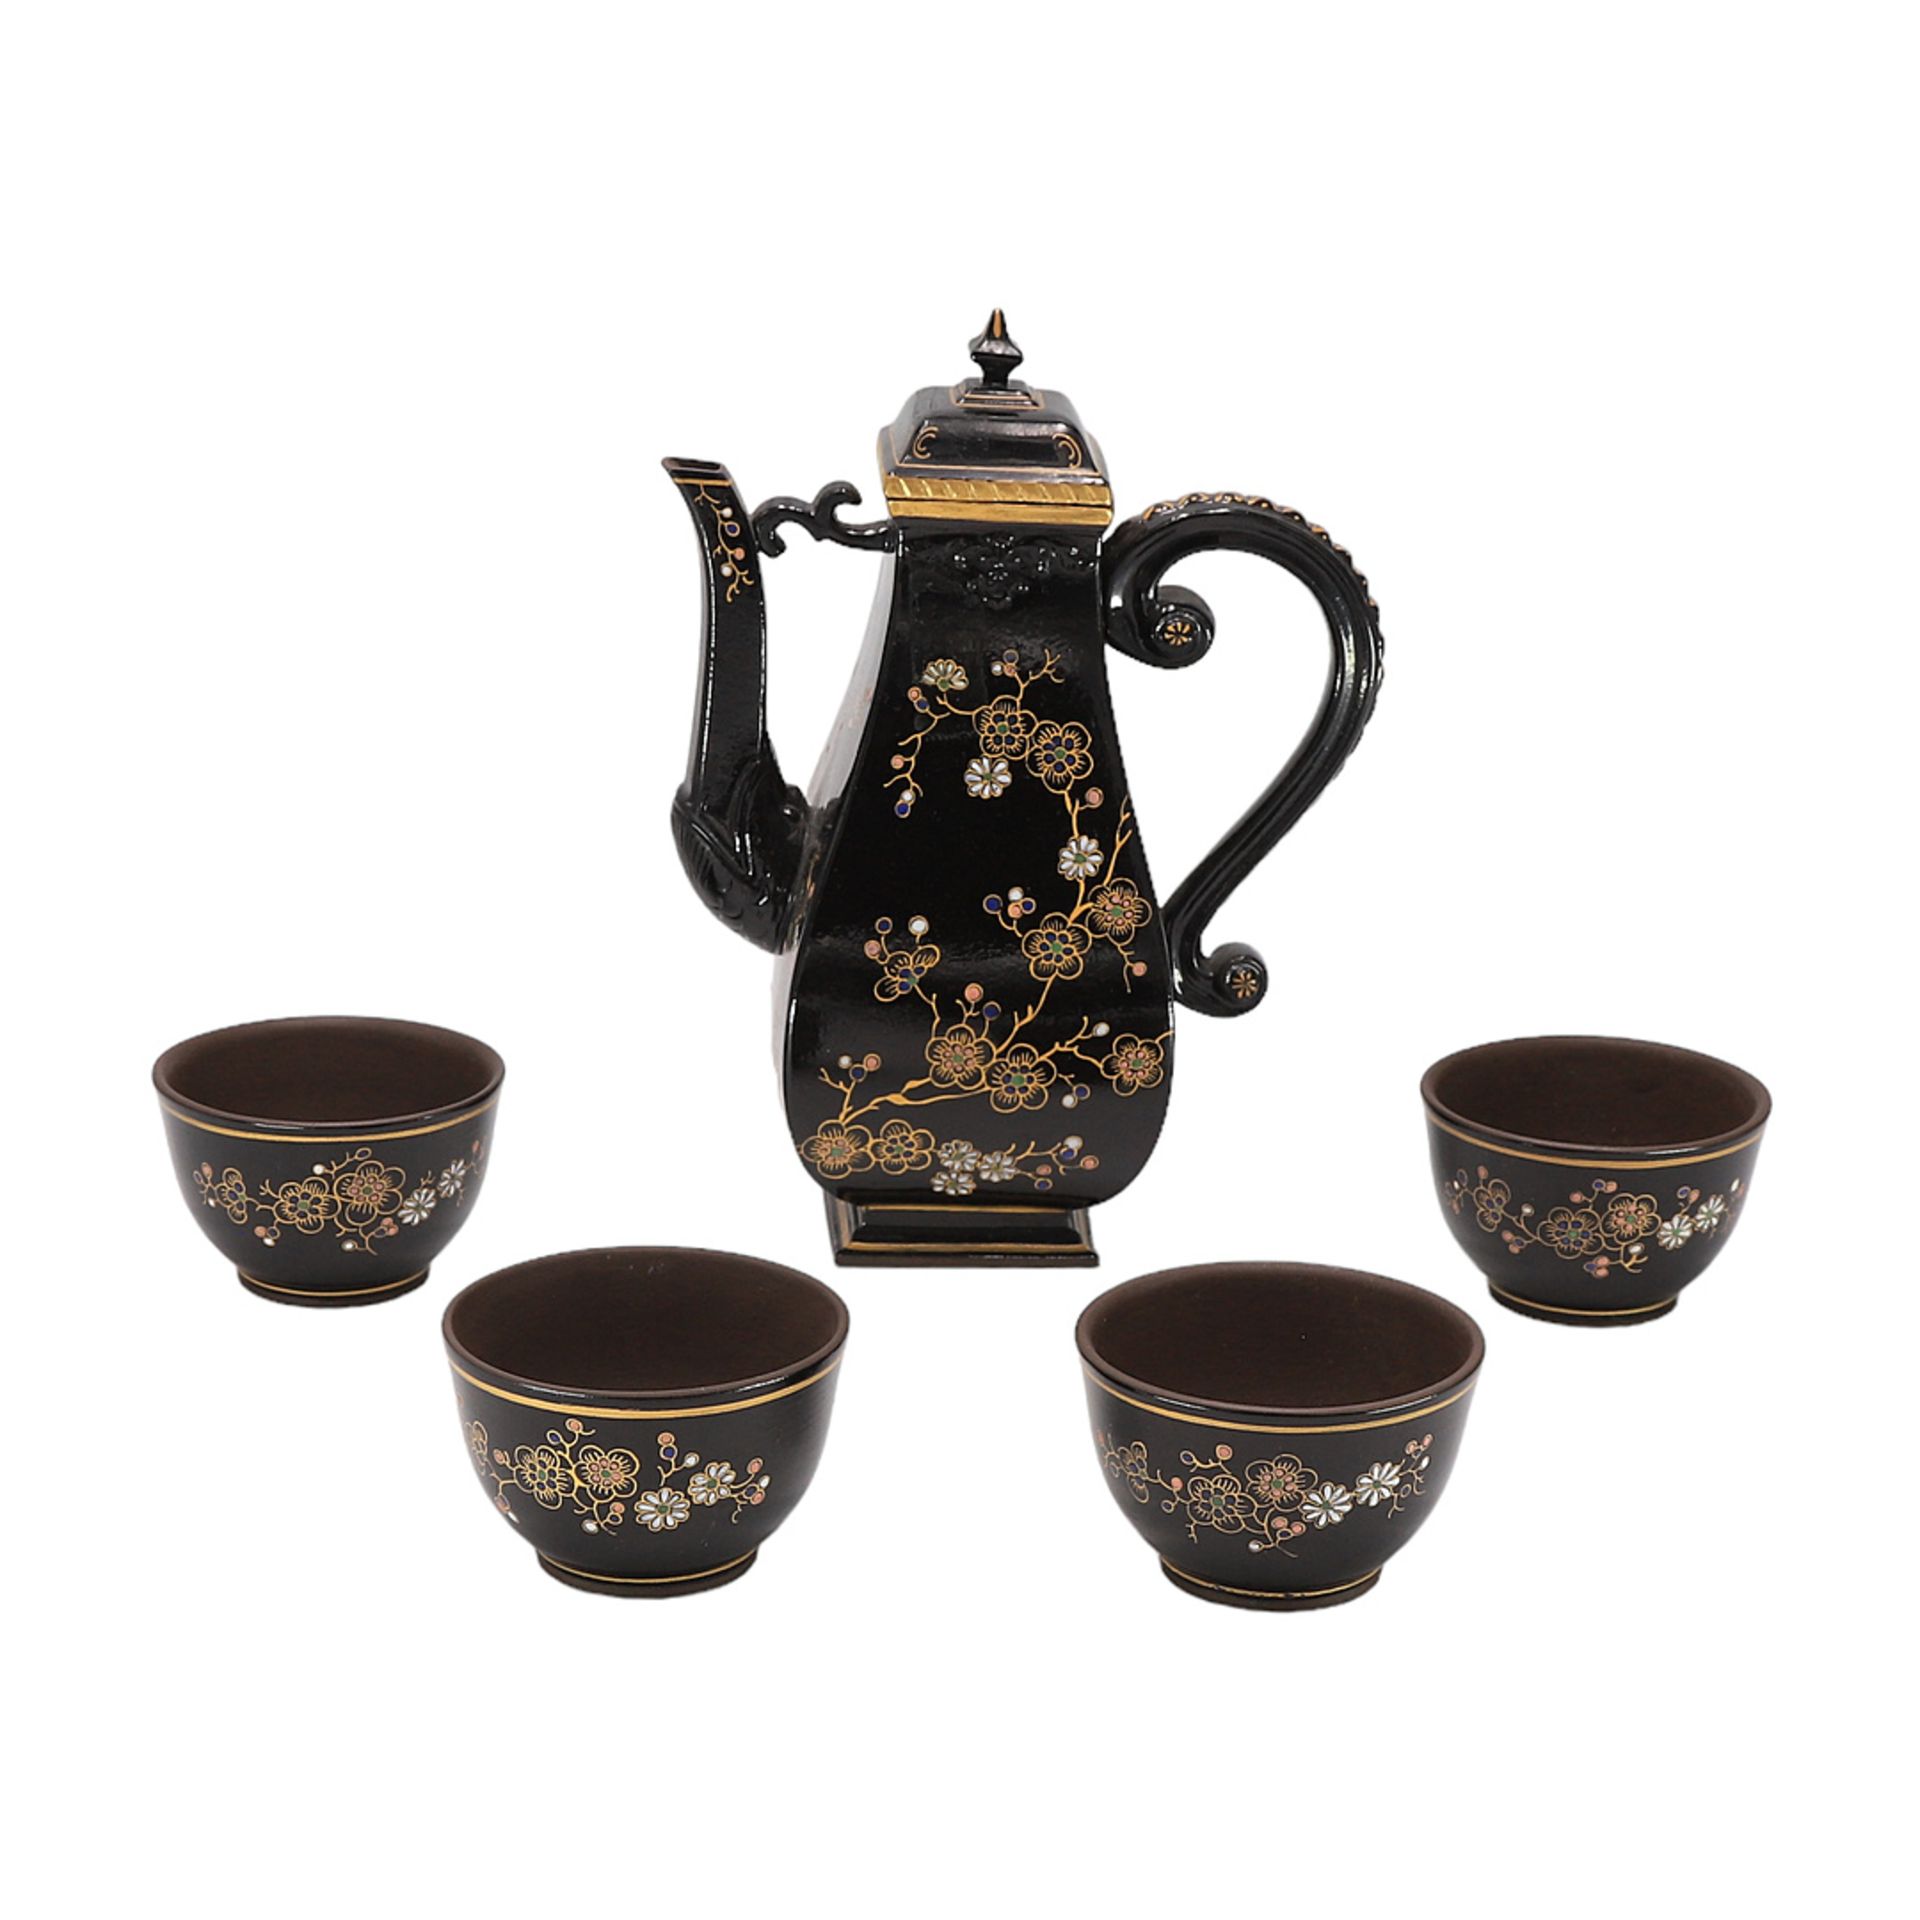 Meissen tea set for four people, 20th century